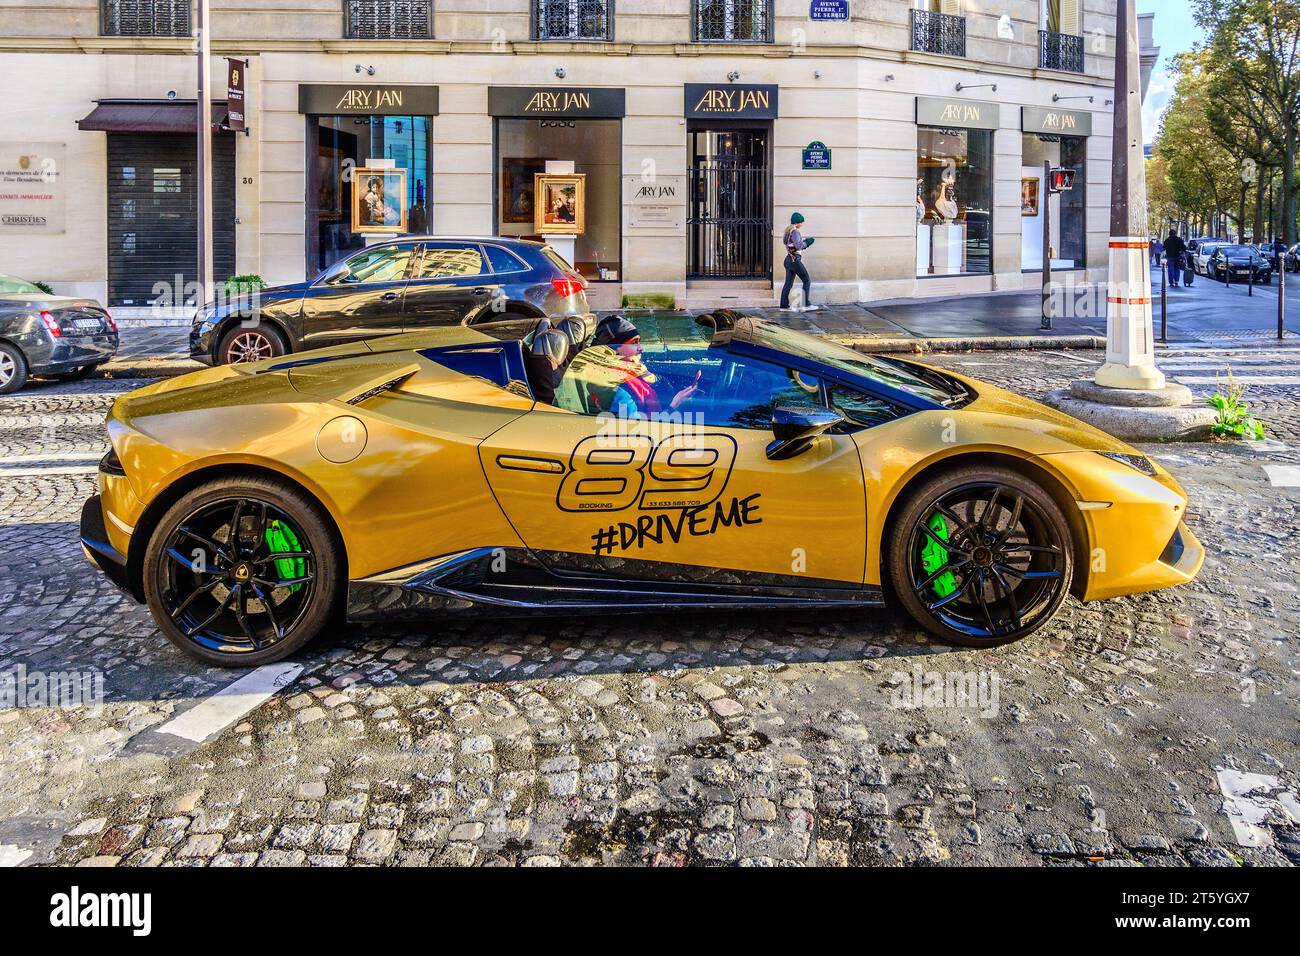 Noleggio auto Lamborghini Spyder in una strada acciottolata parigina - Parigi, Francia. Foto Stock